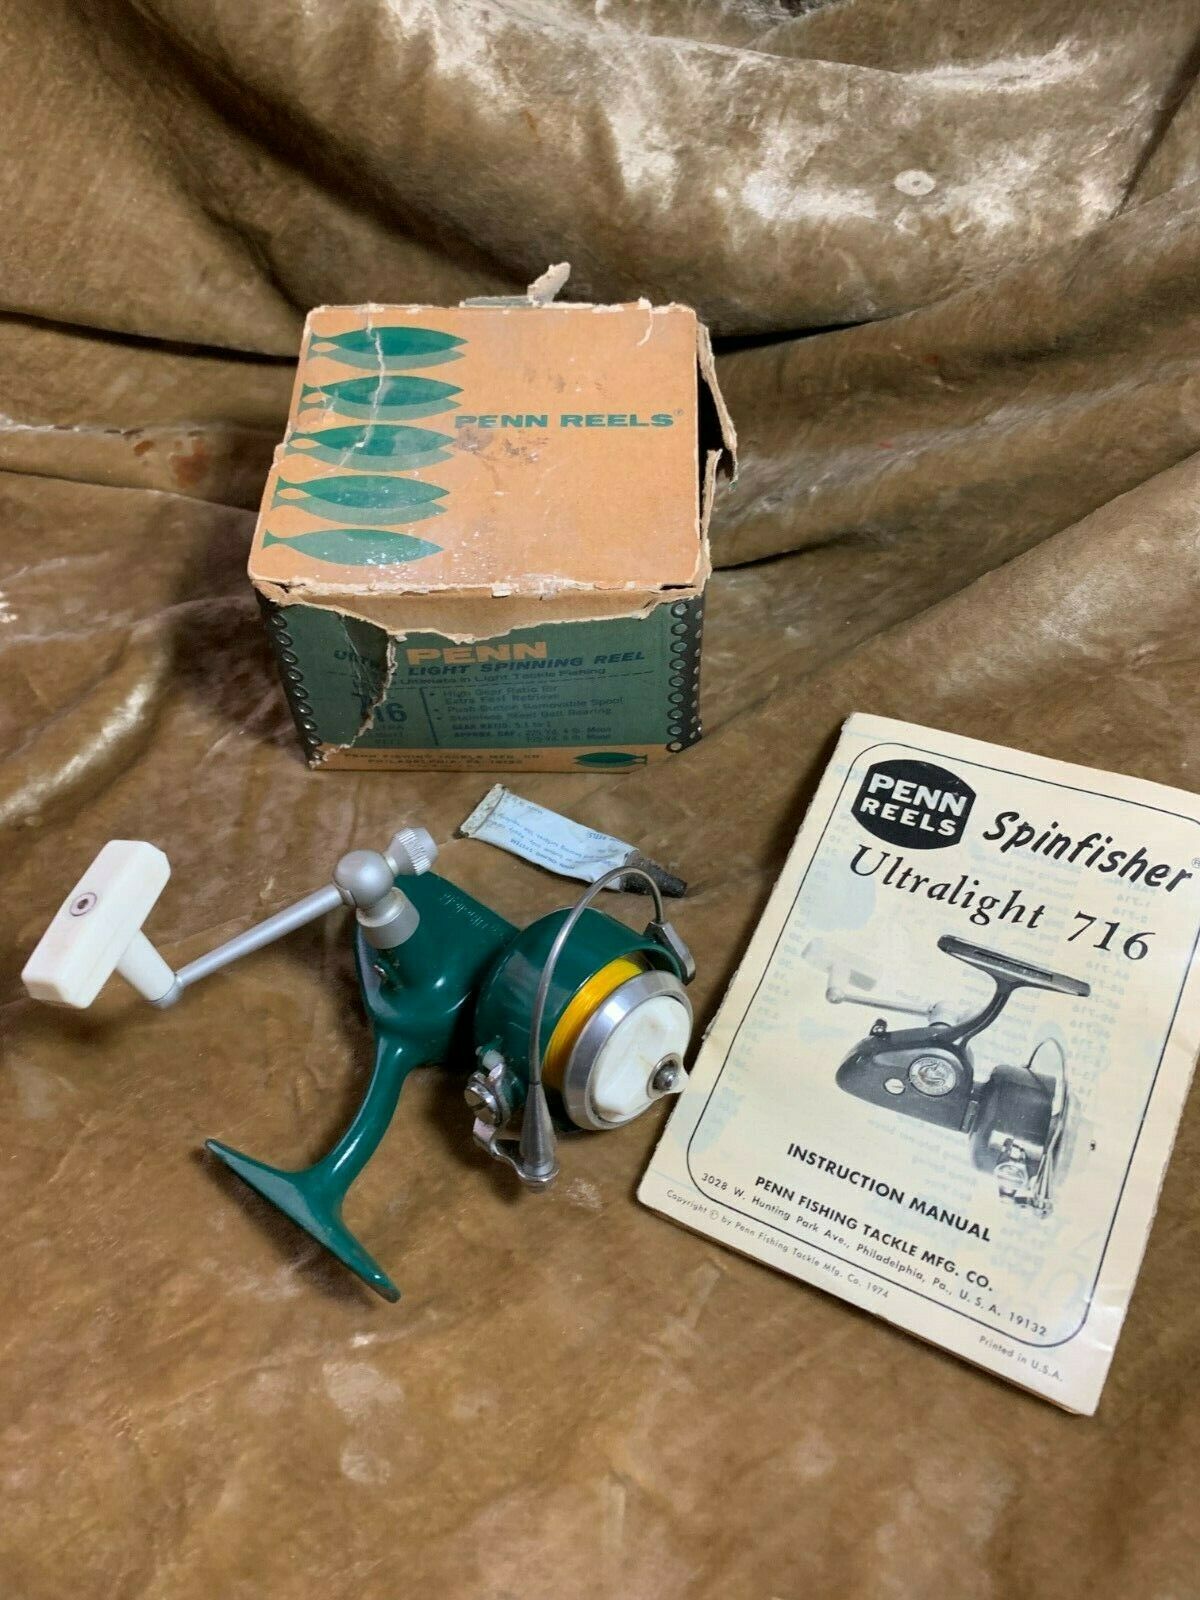 Penn Reels Ultralight 716 Reel Never Used In Original Box W/manual From 1974